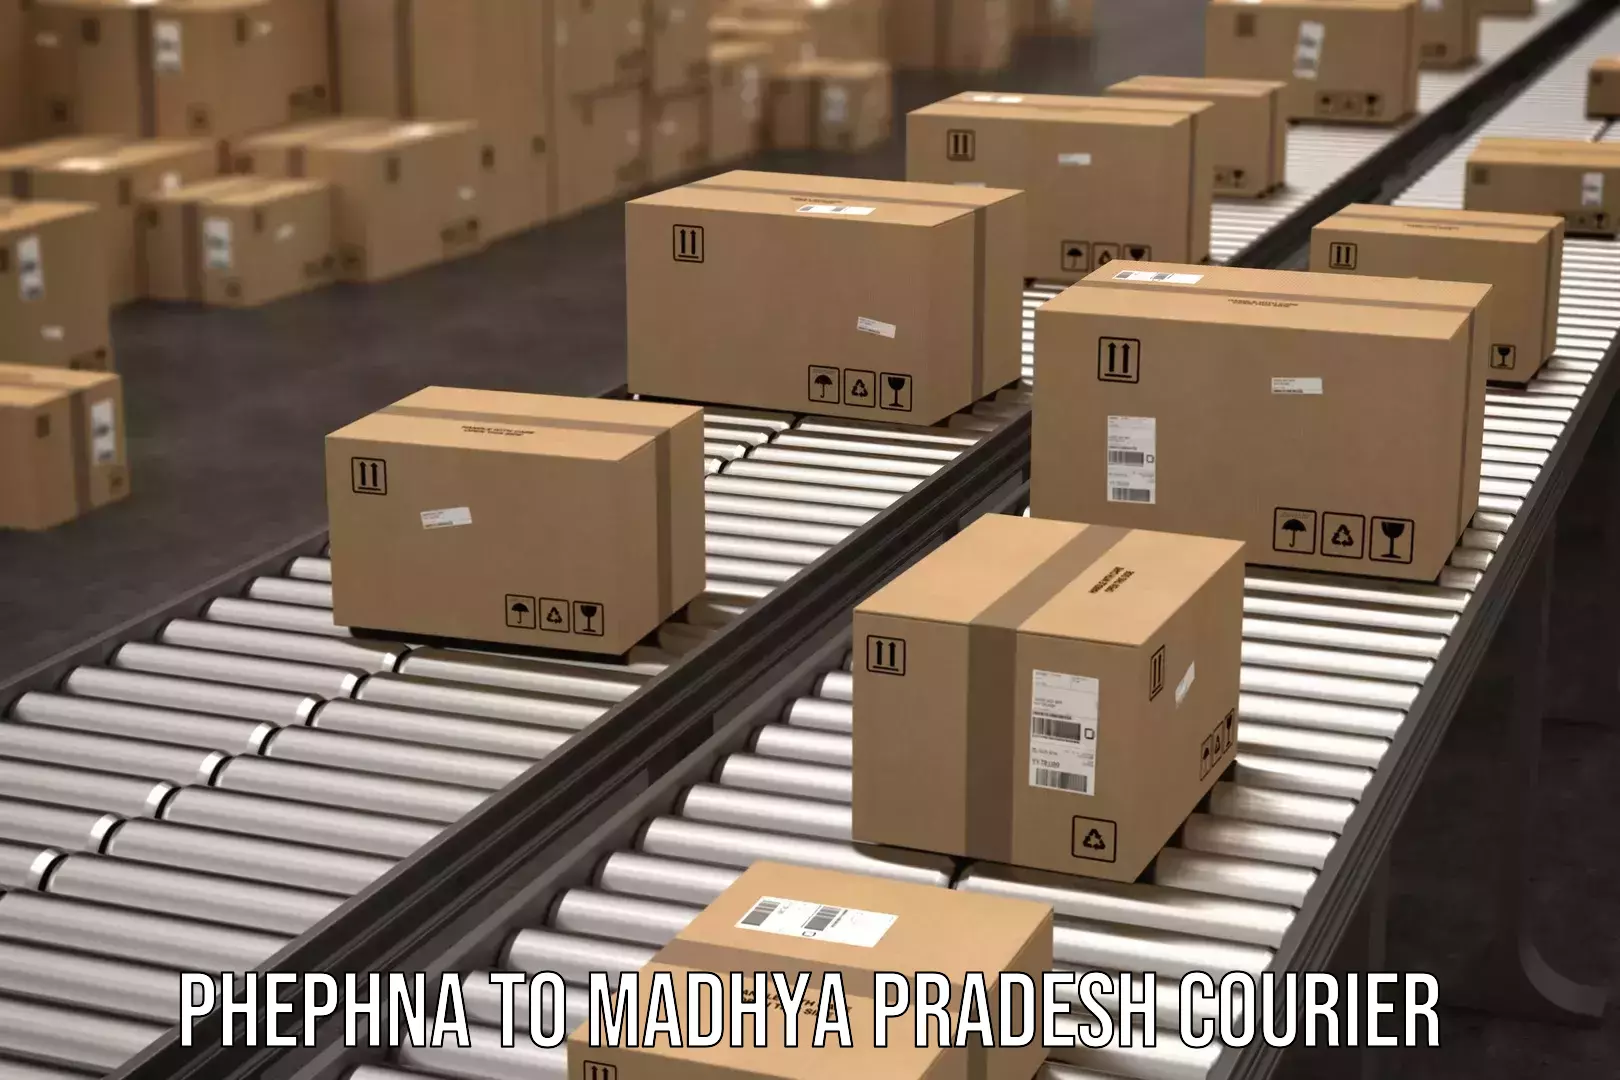 Express package handling Phephna to Amarkantak